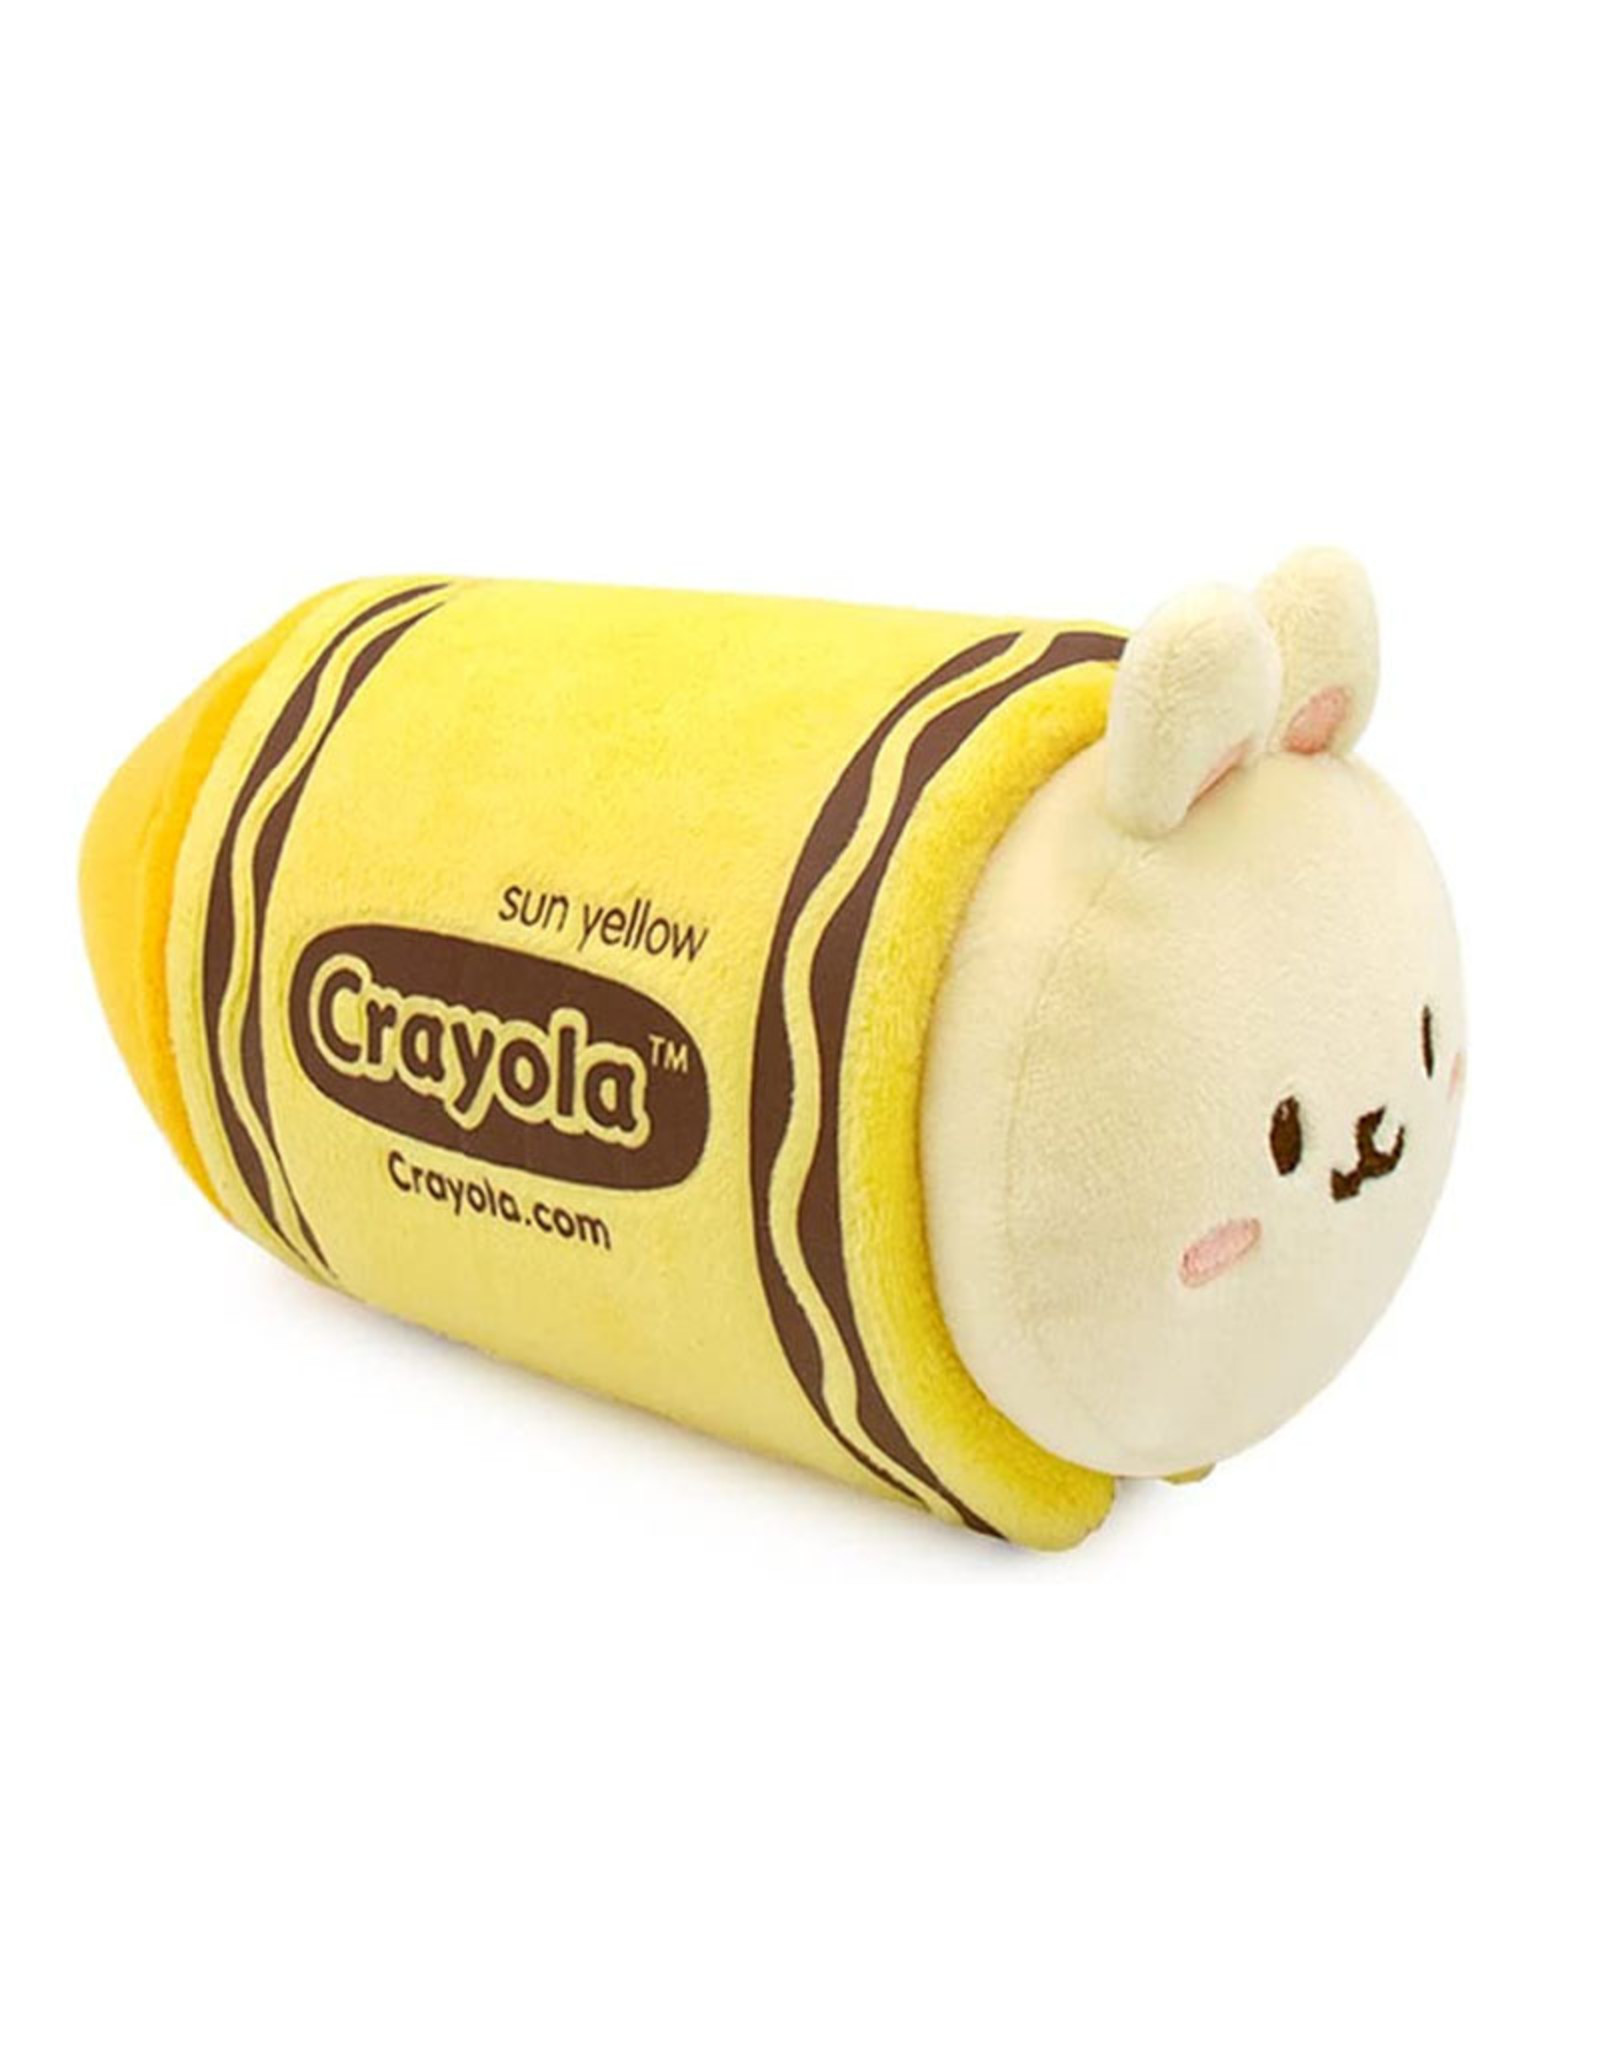 Coosy Anirollz: Crayola Bunniroll Plush